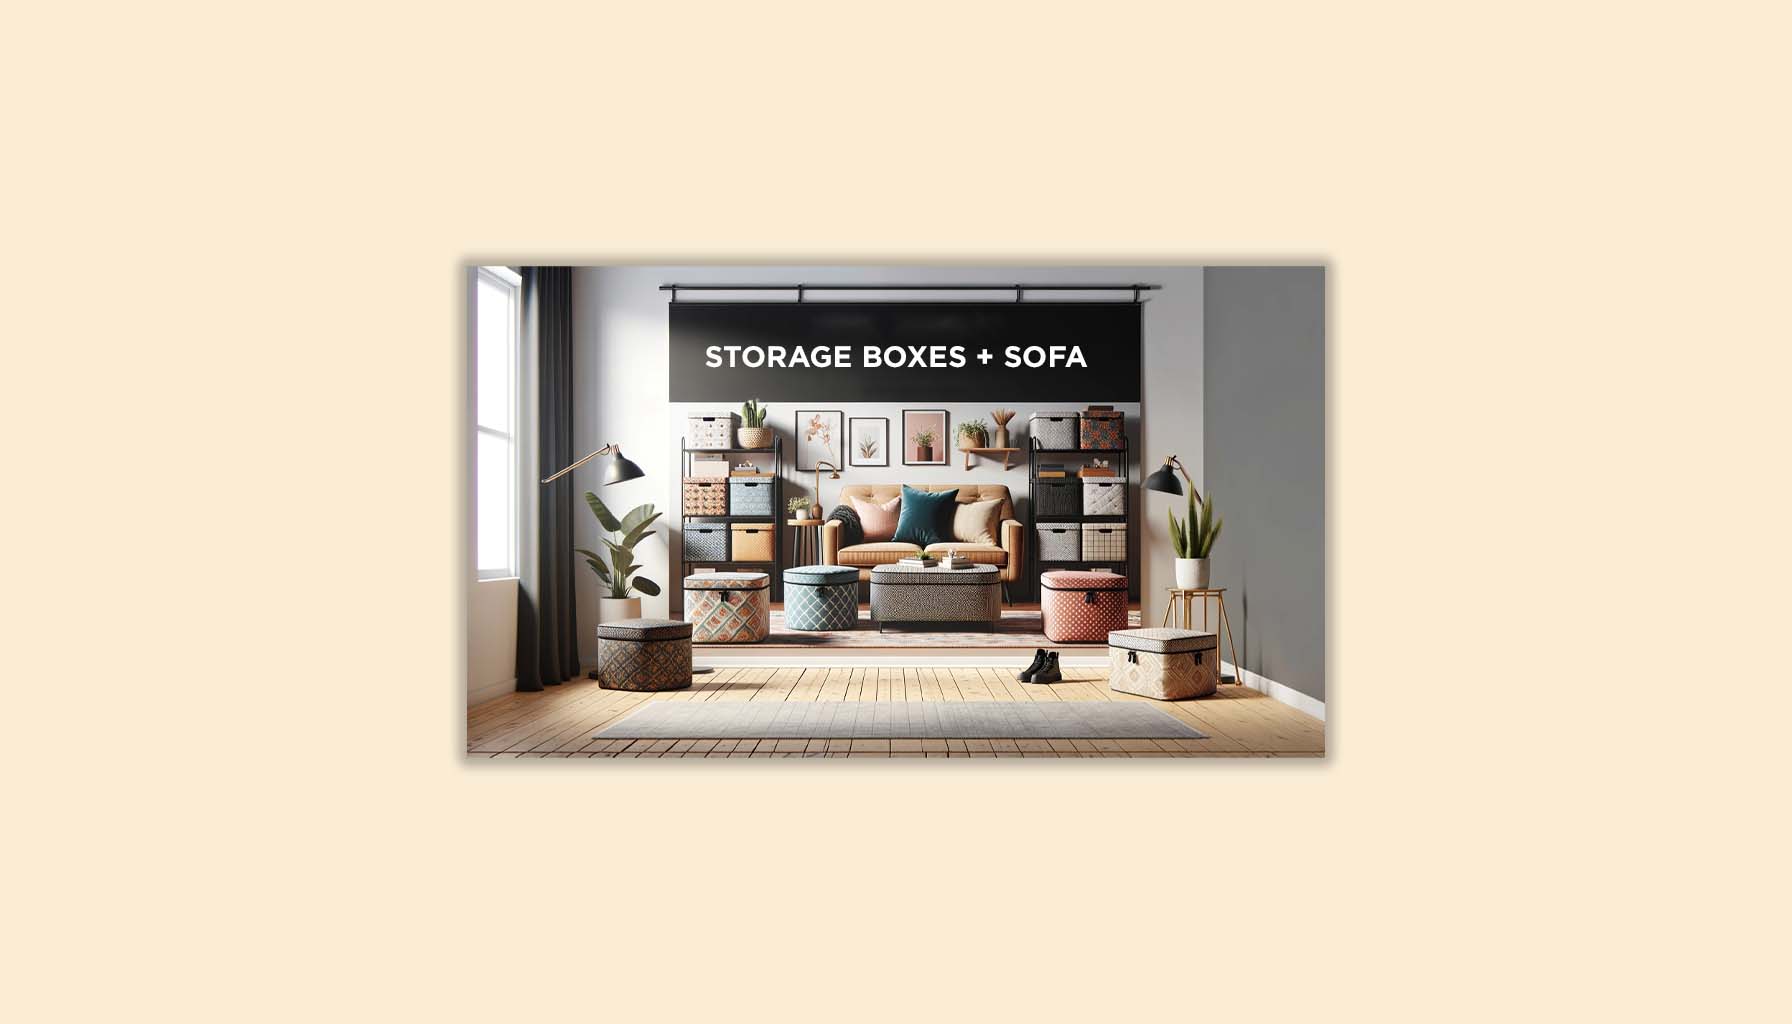 "Stylish Ottoman Storage Boxes Cum Sofa - Versatile and Space-Saving"